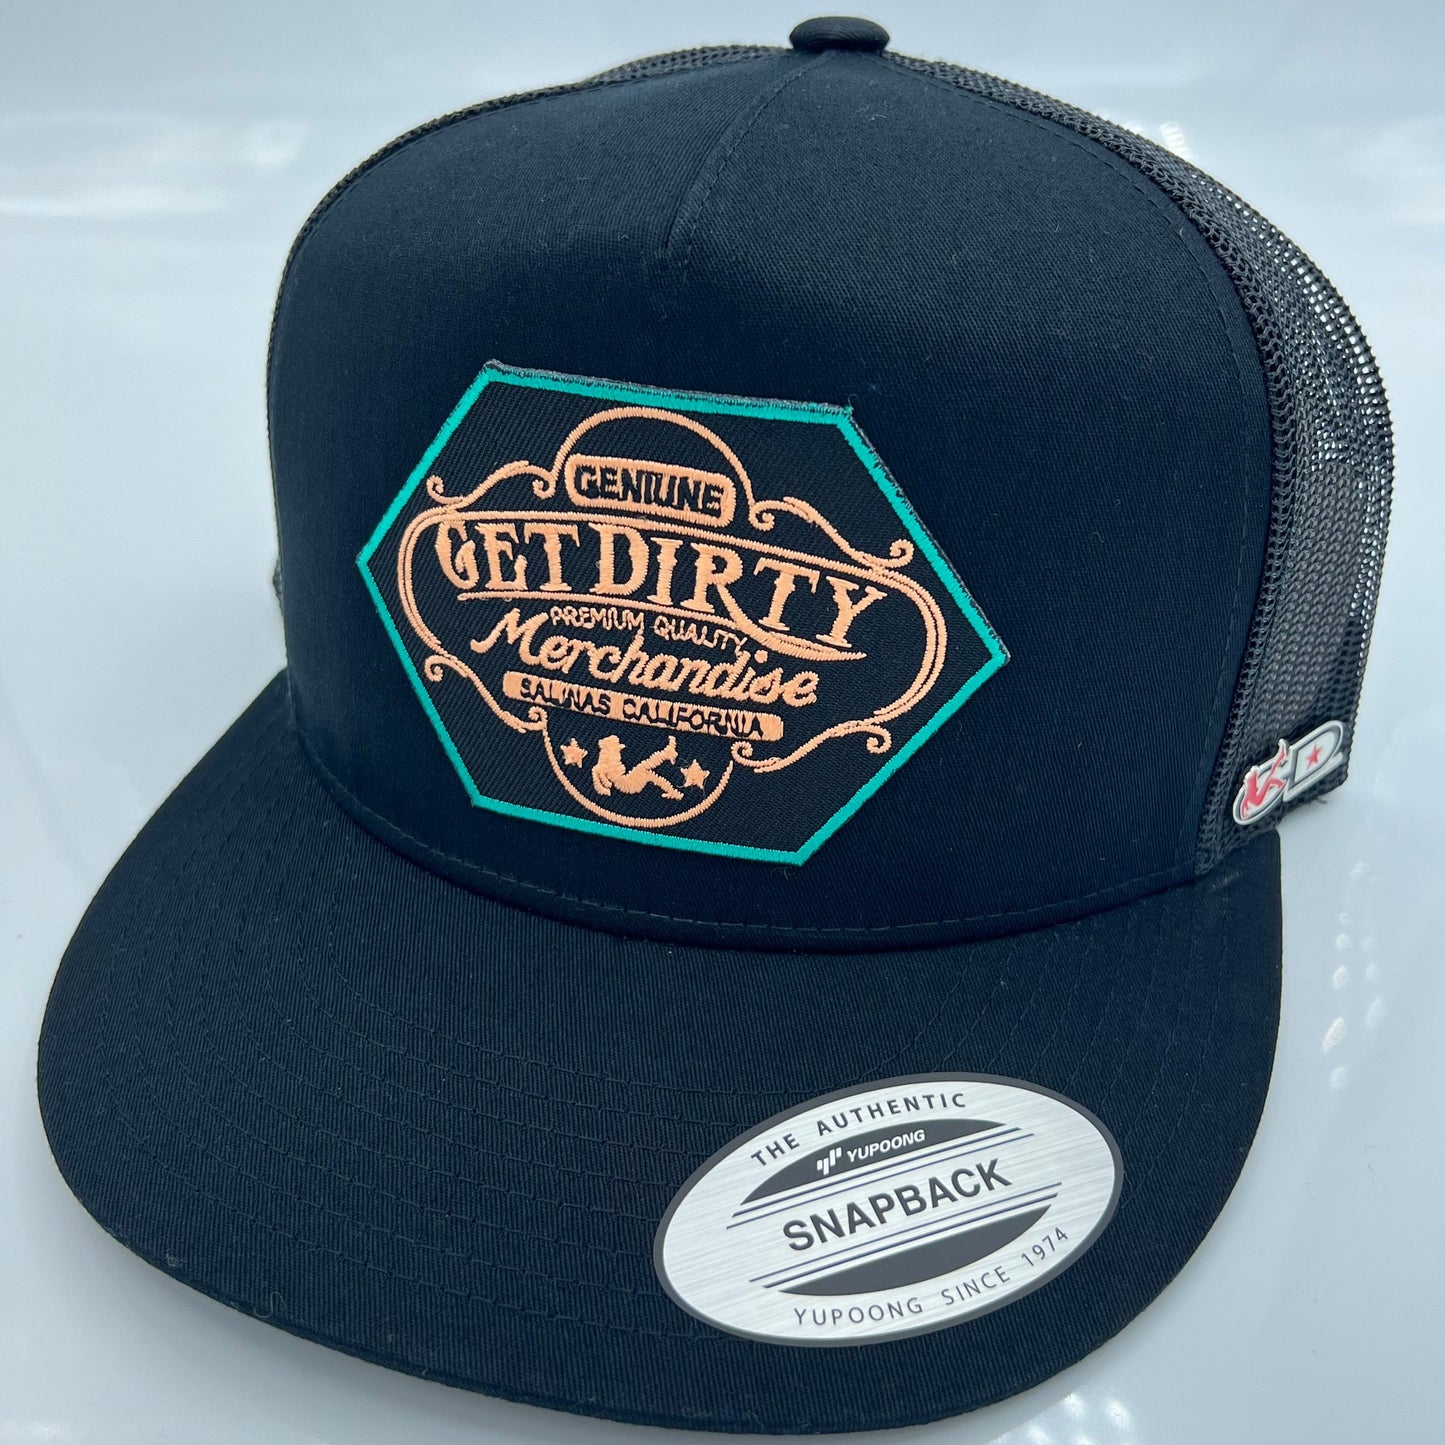 Get Dirty Merchandise BLK Balaclava Blk/Blk Trucker Hat